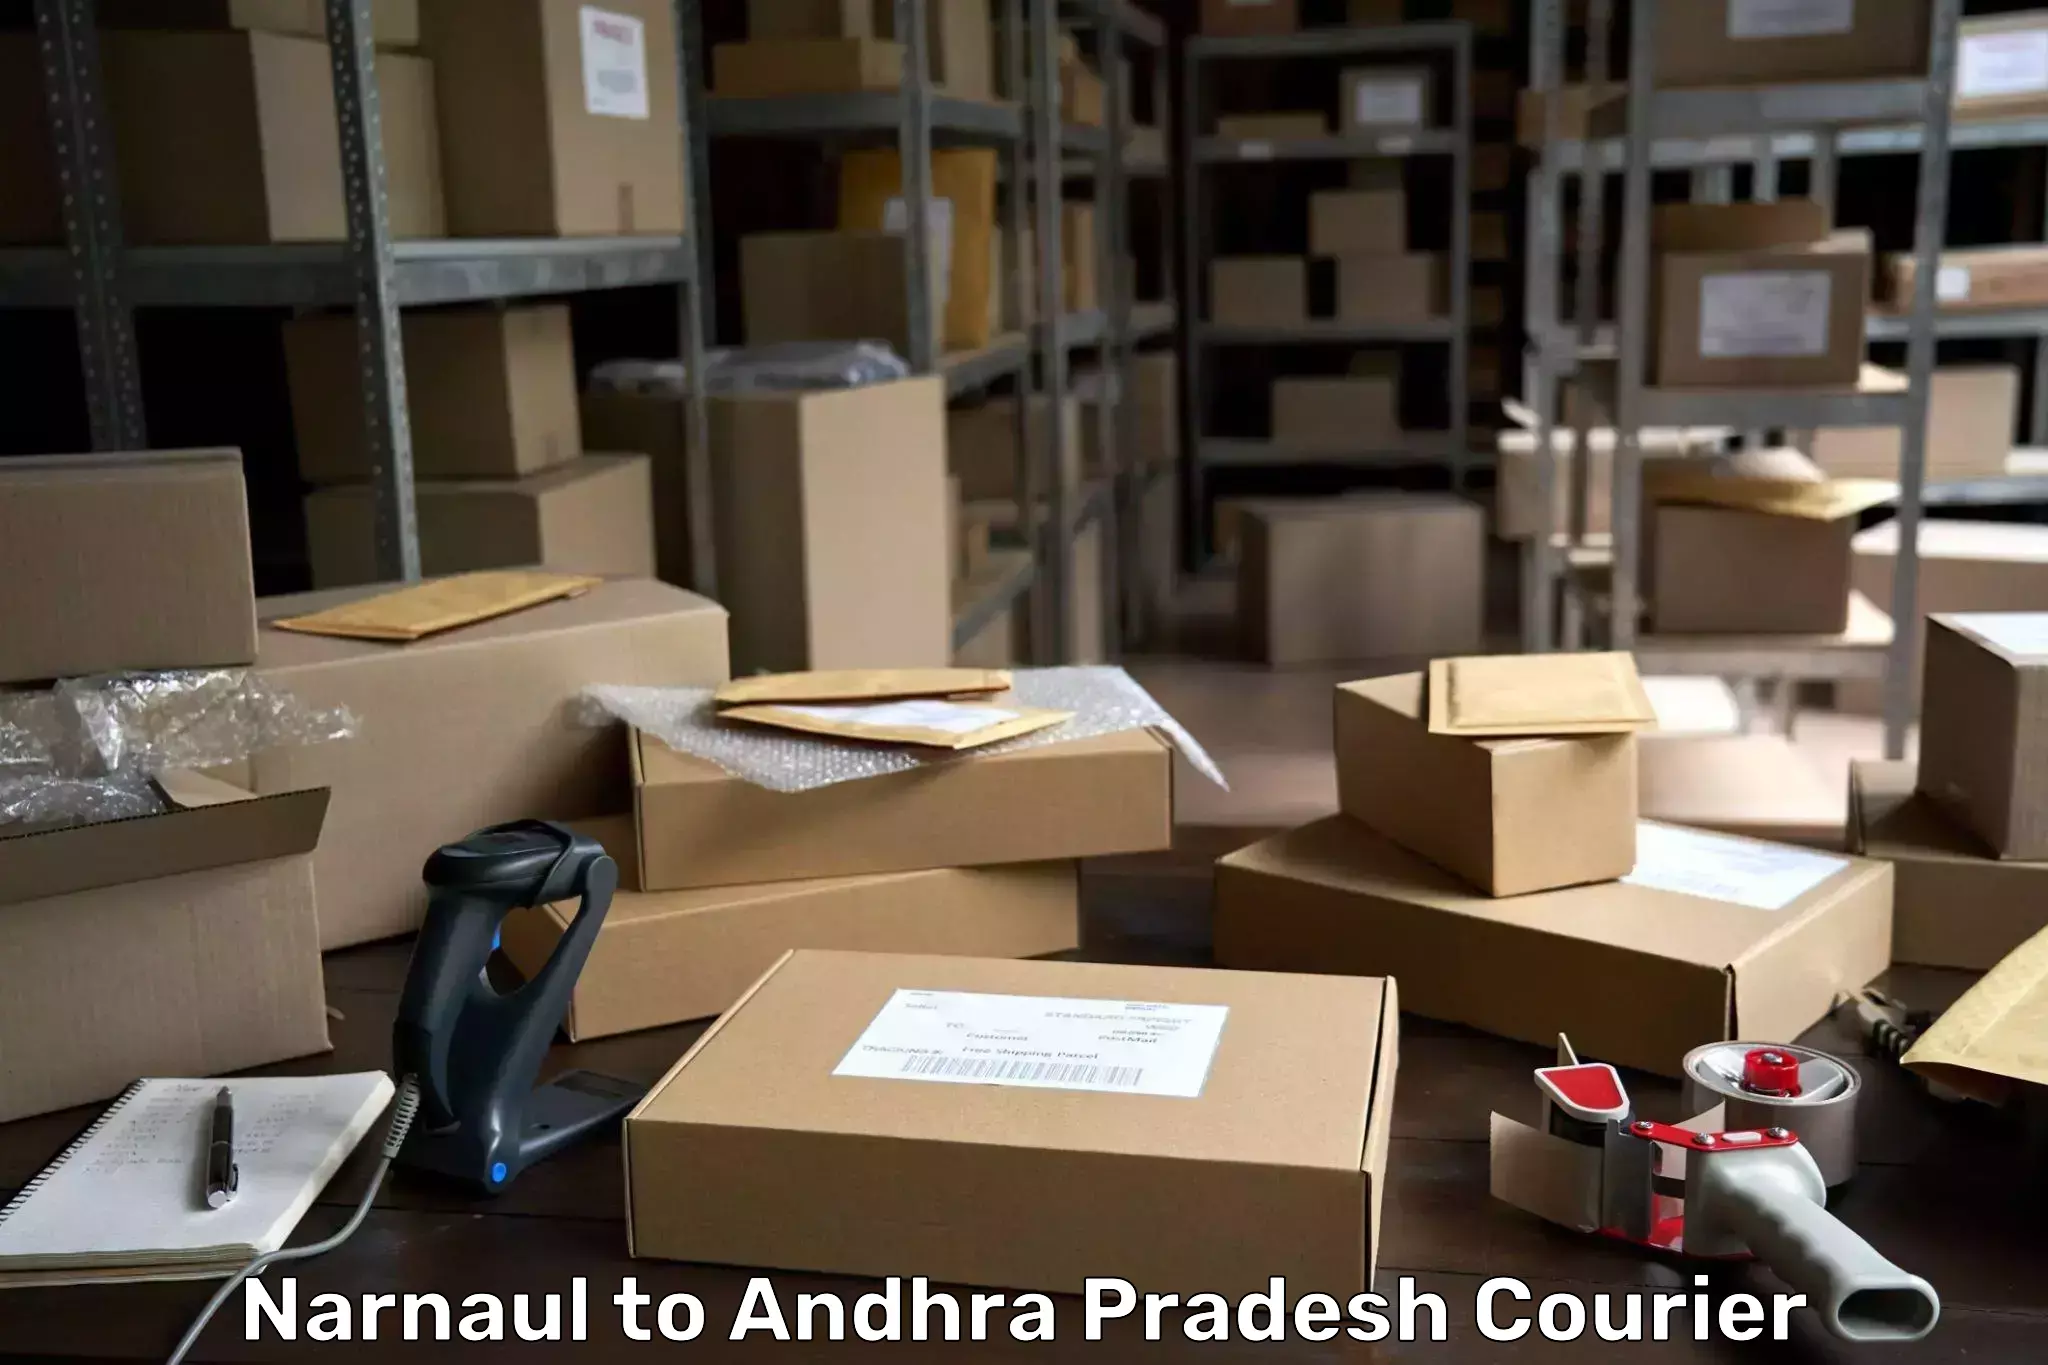 High-capacity parcel service Narnaul to Devarapalli